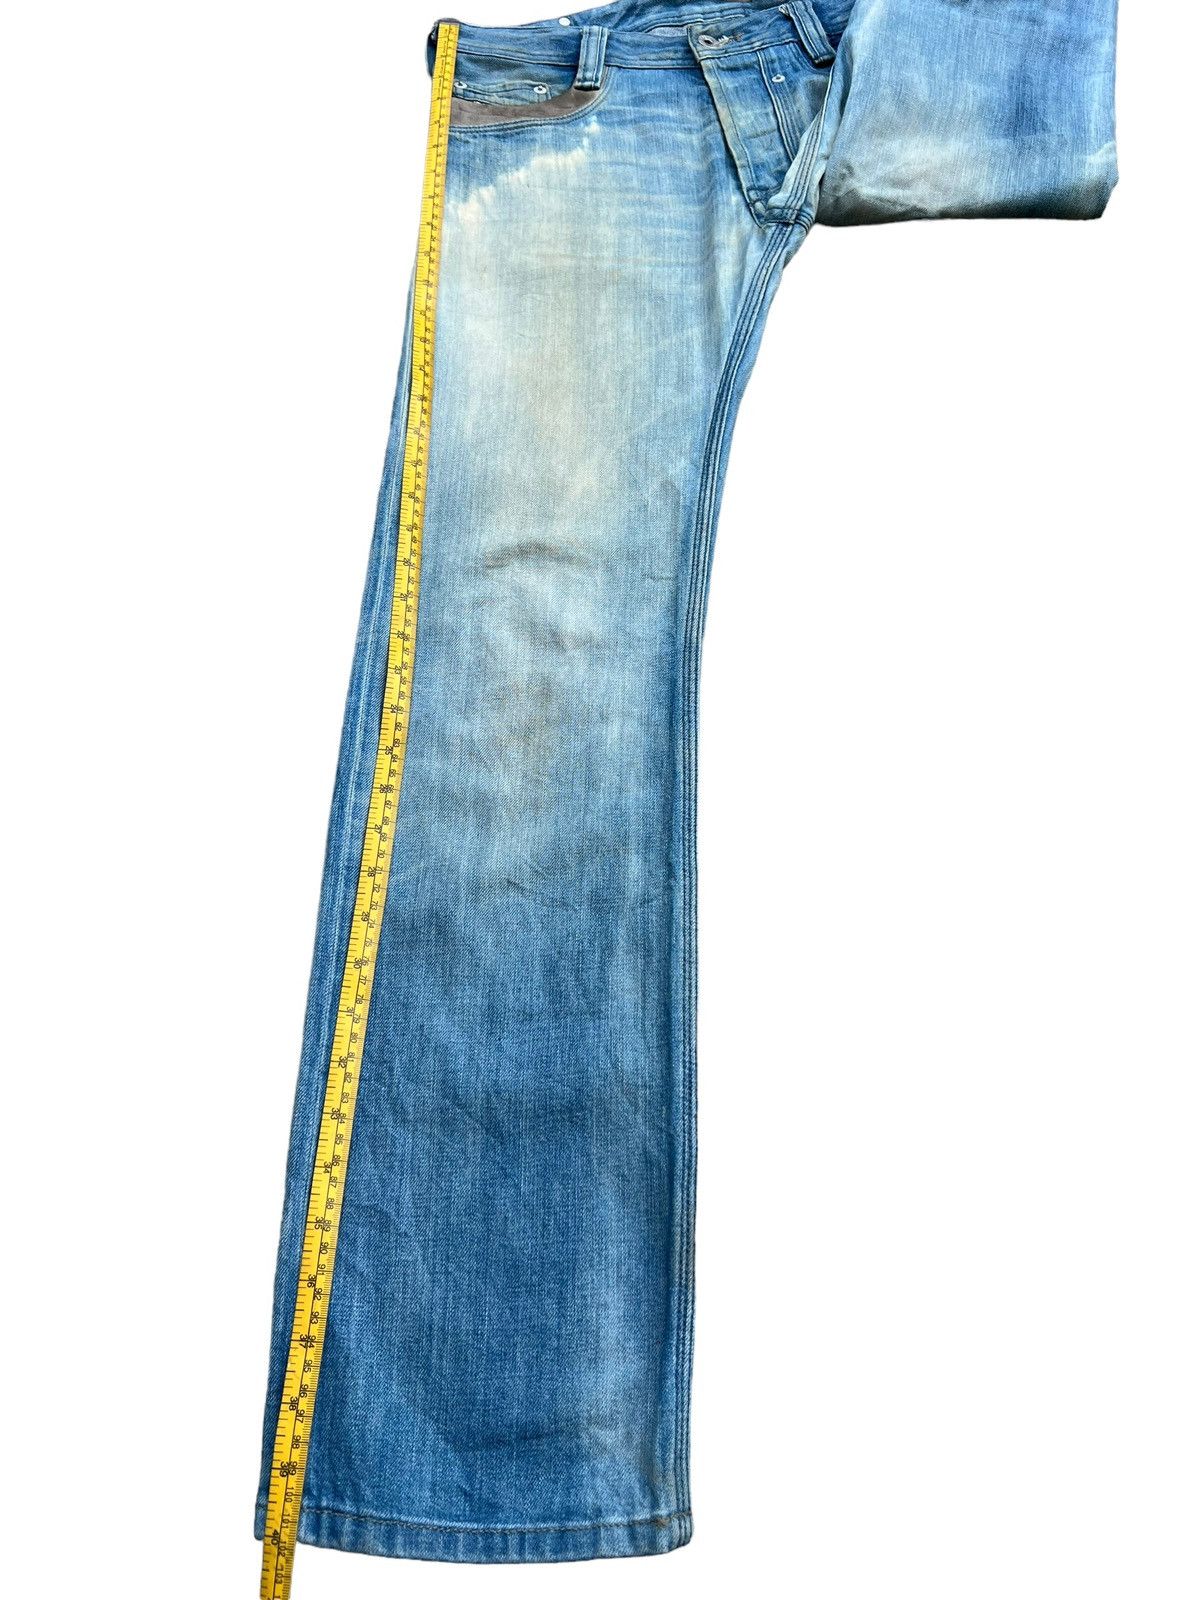 Vintage Diesel Leather Faded Distressed Denim Jeans 32x31 - 12